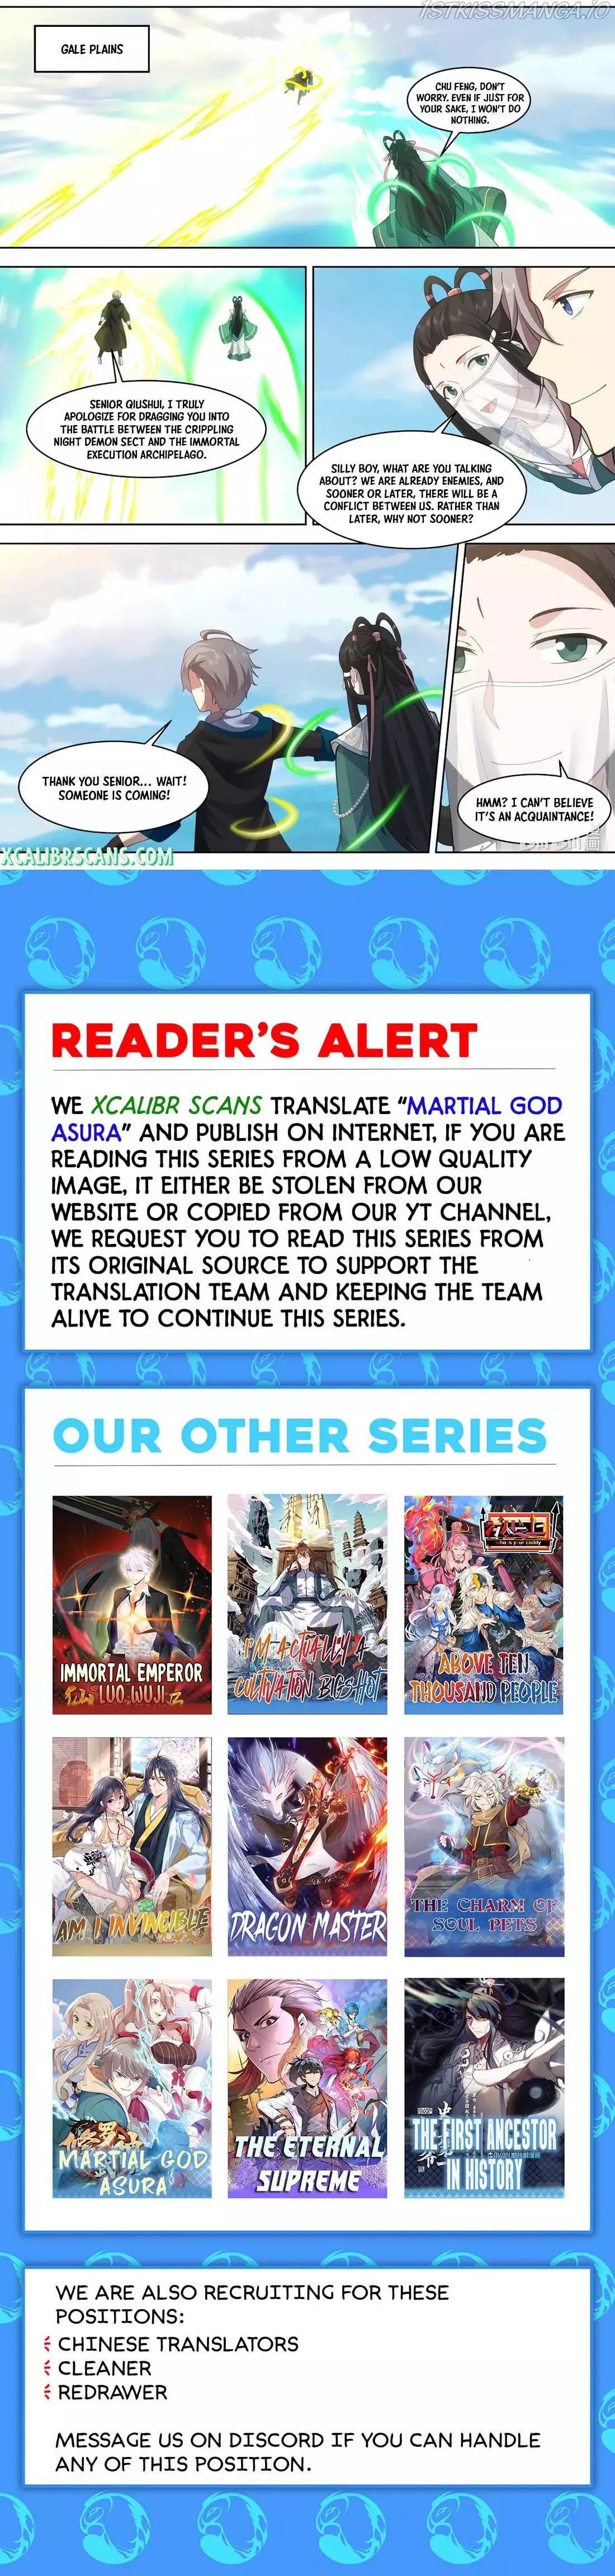 Martial God Asura - 565 page 10-c9111741